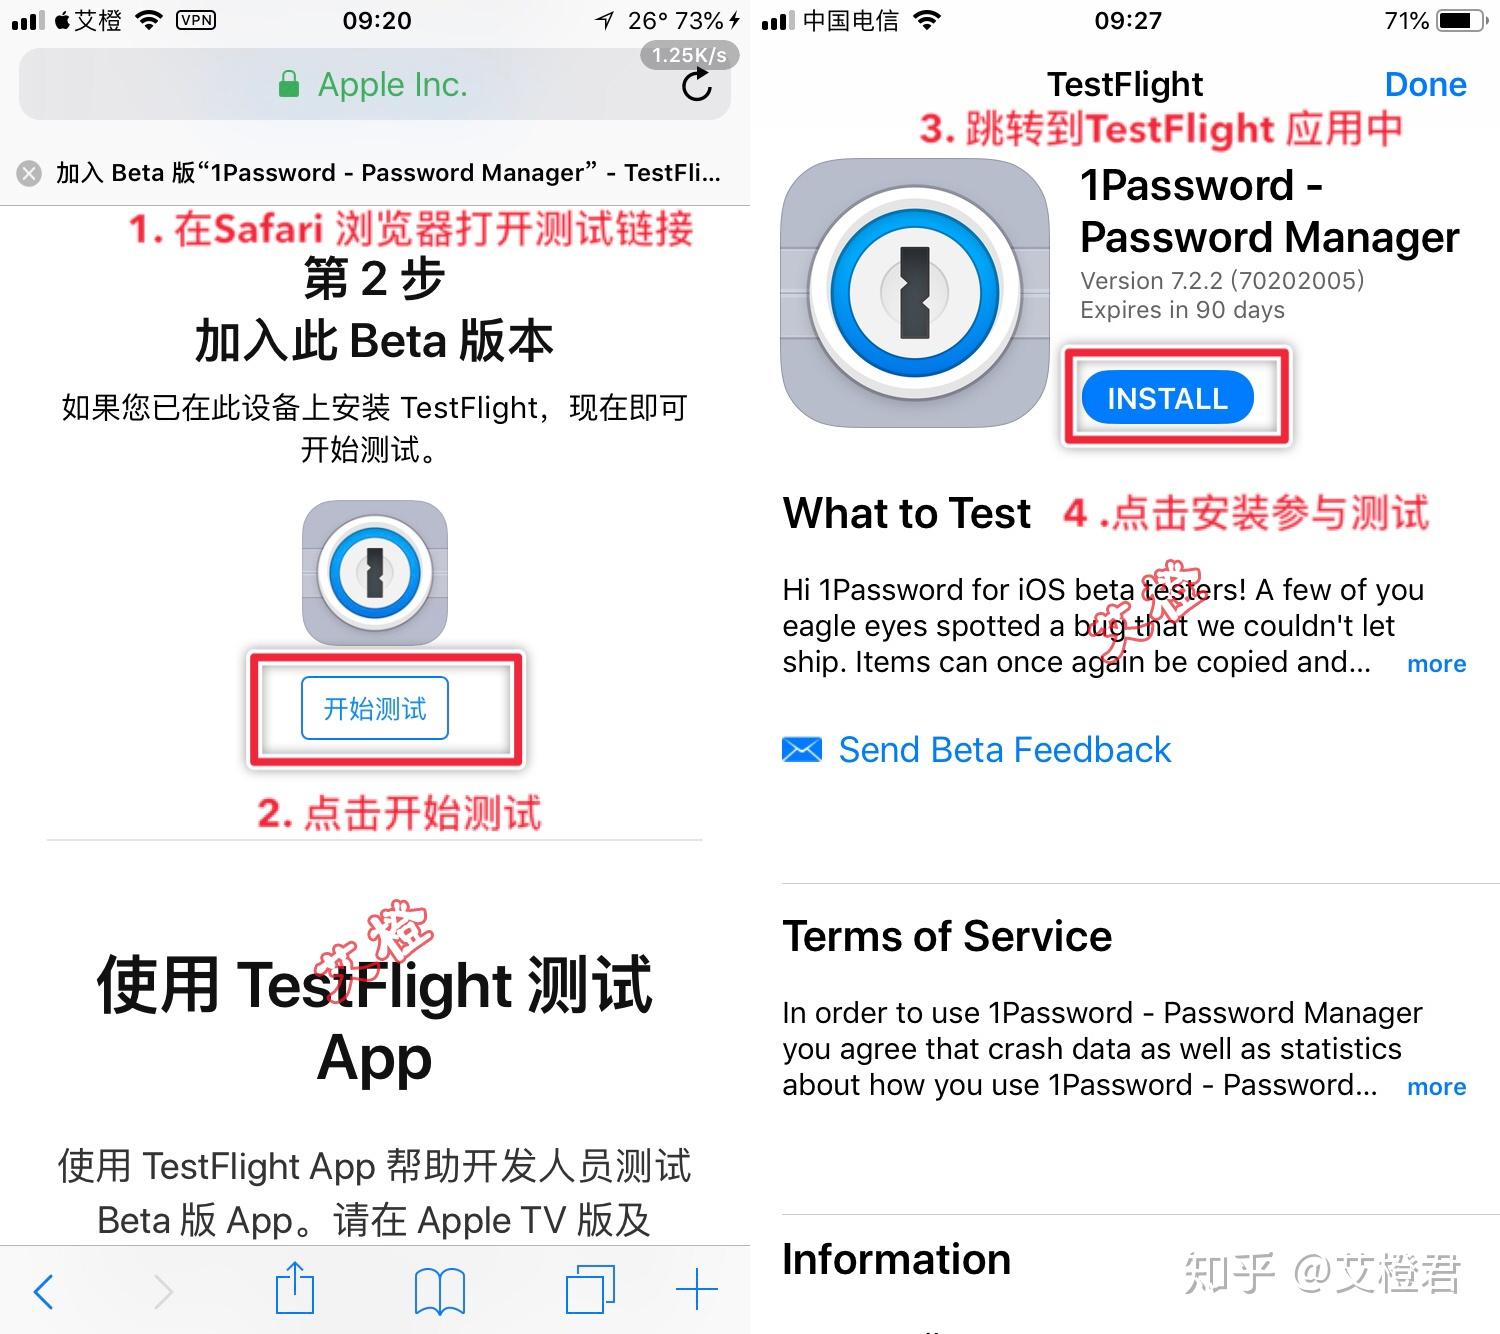 Testing iOS Apps via TestFlight